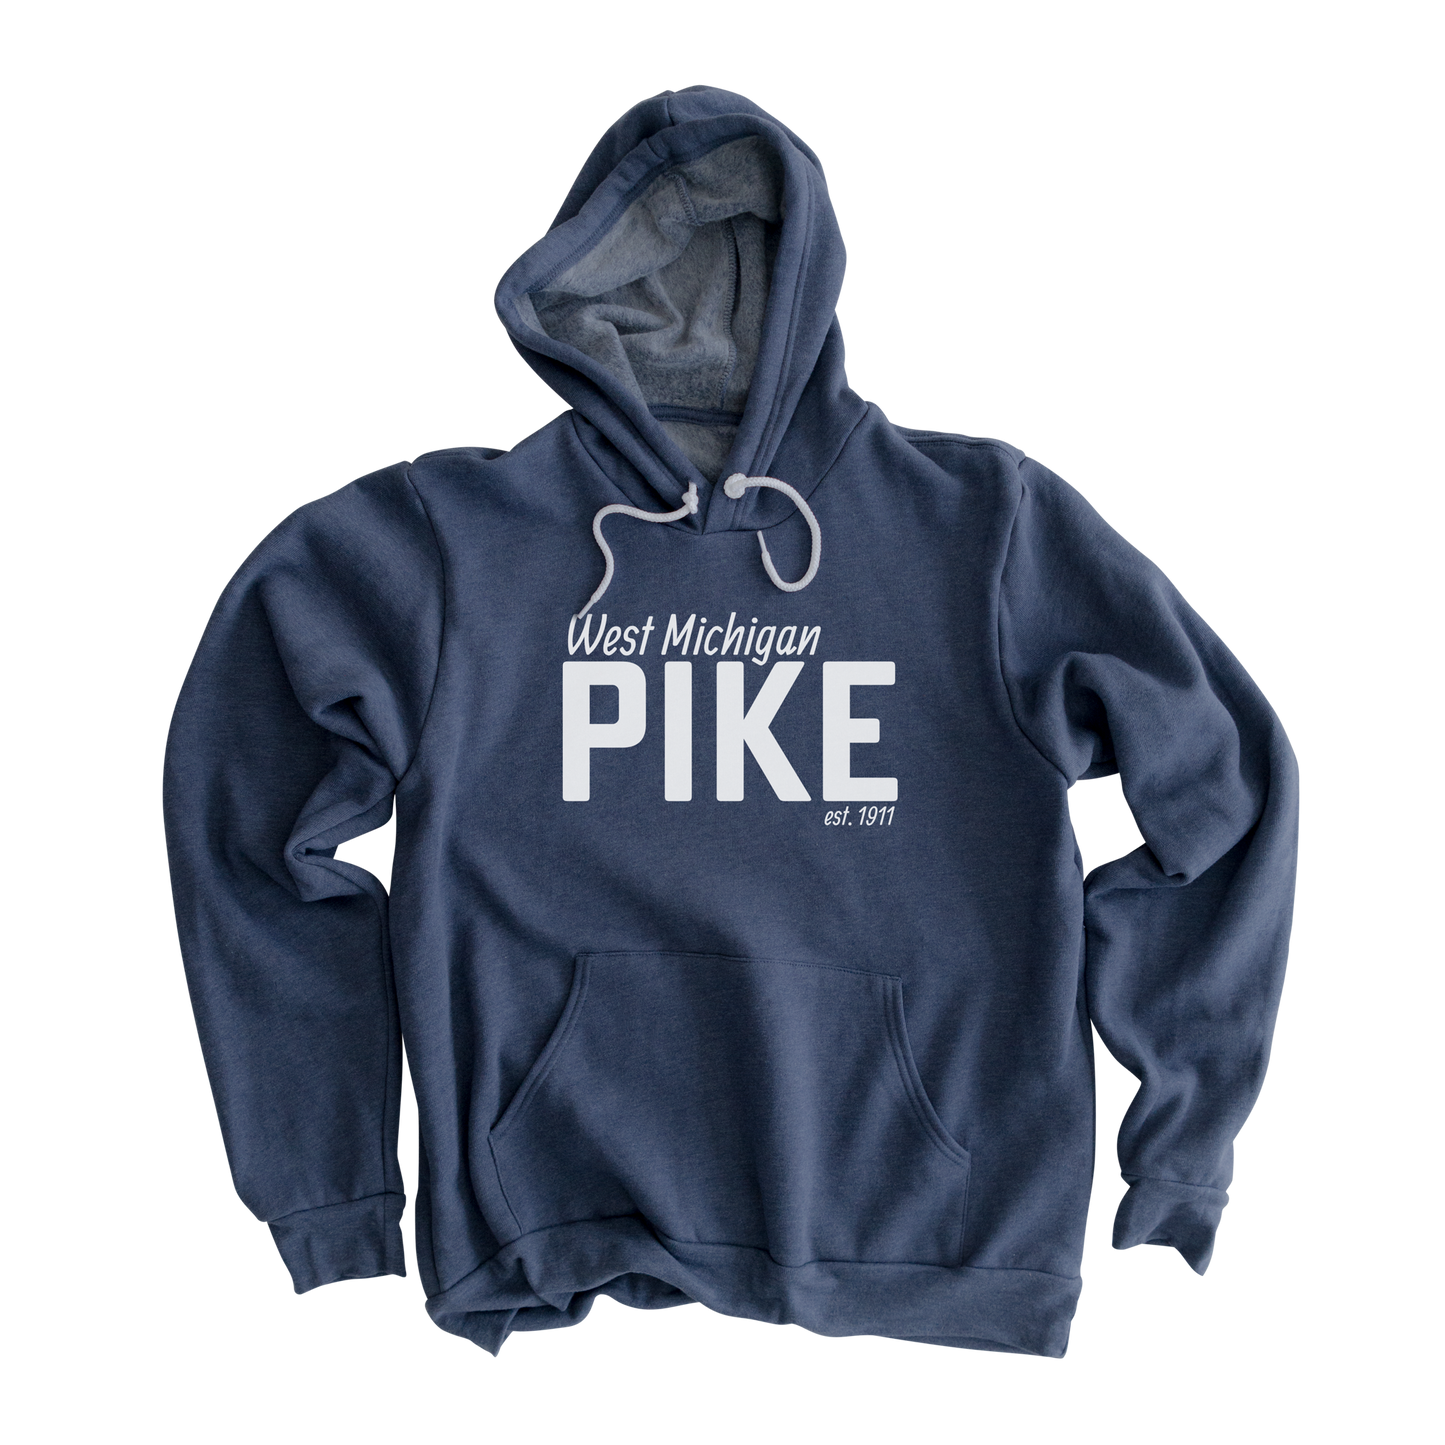 West Michigan Pike Est. 1911 Hooded Sweatshirt